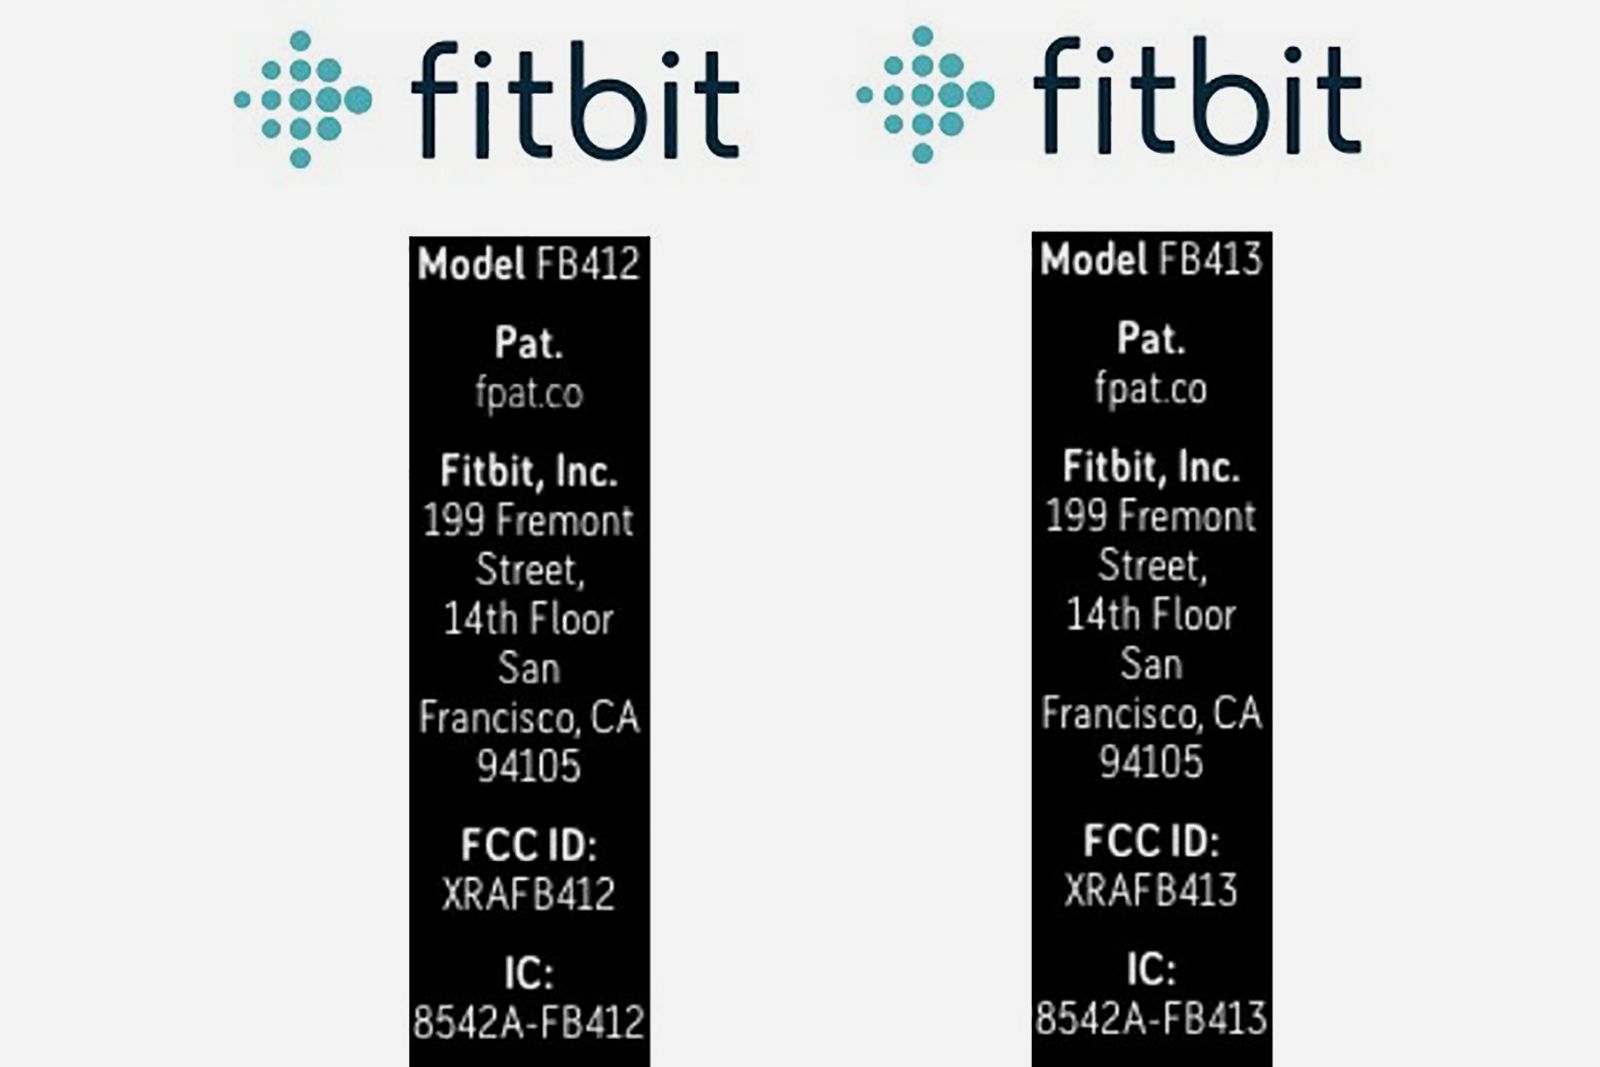 Fitbit image 1